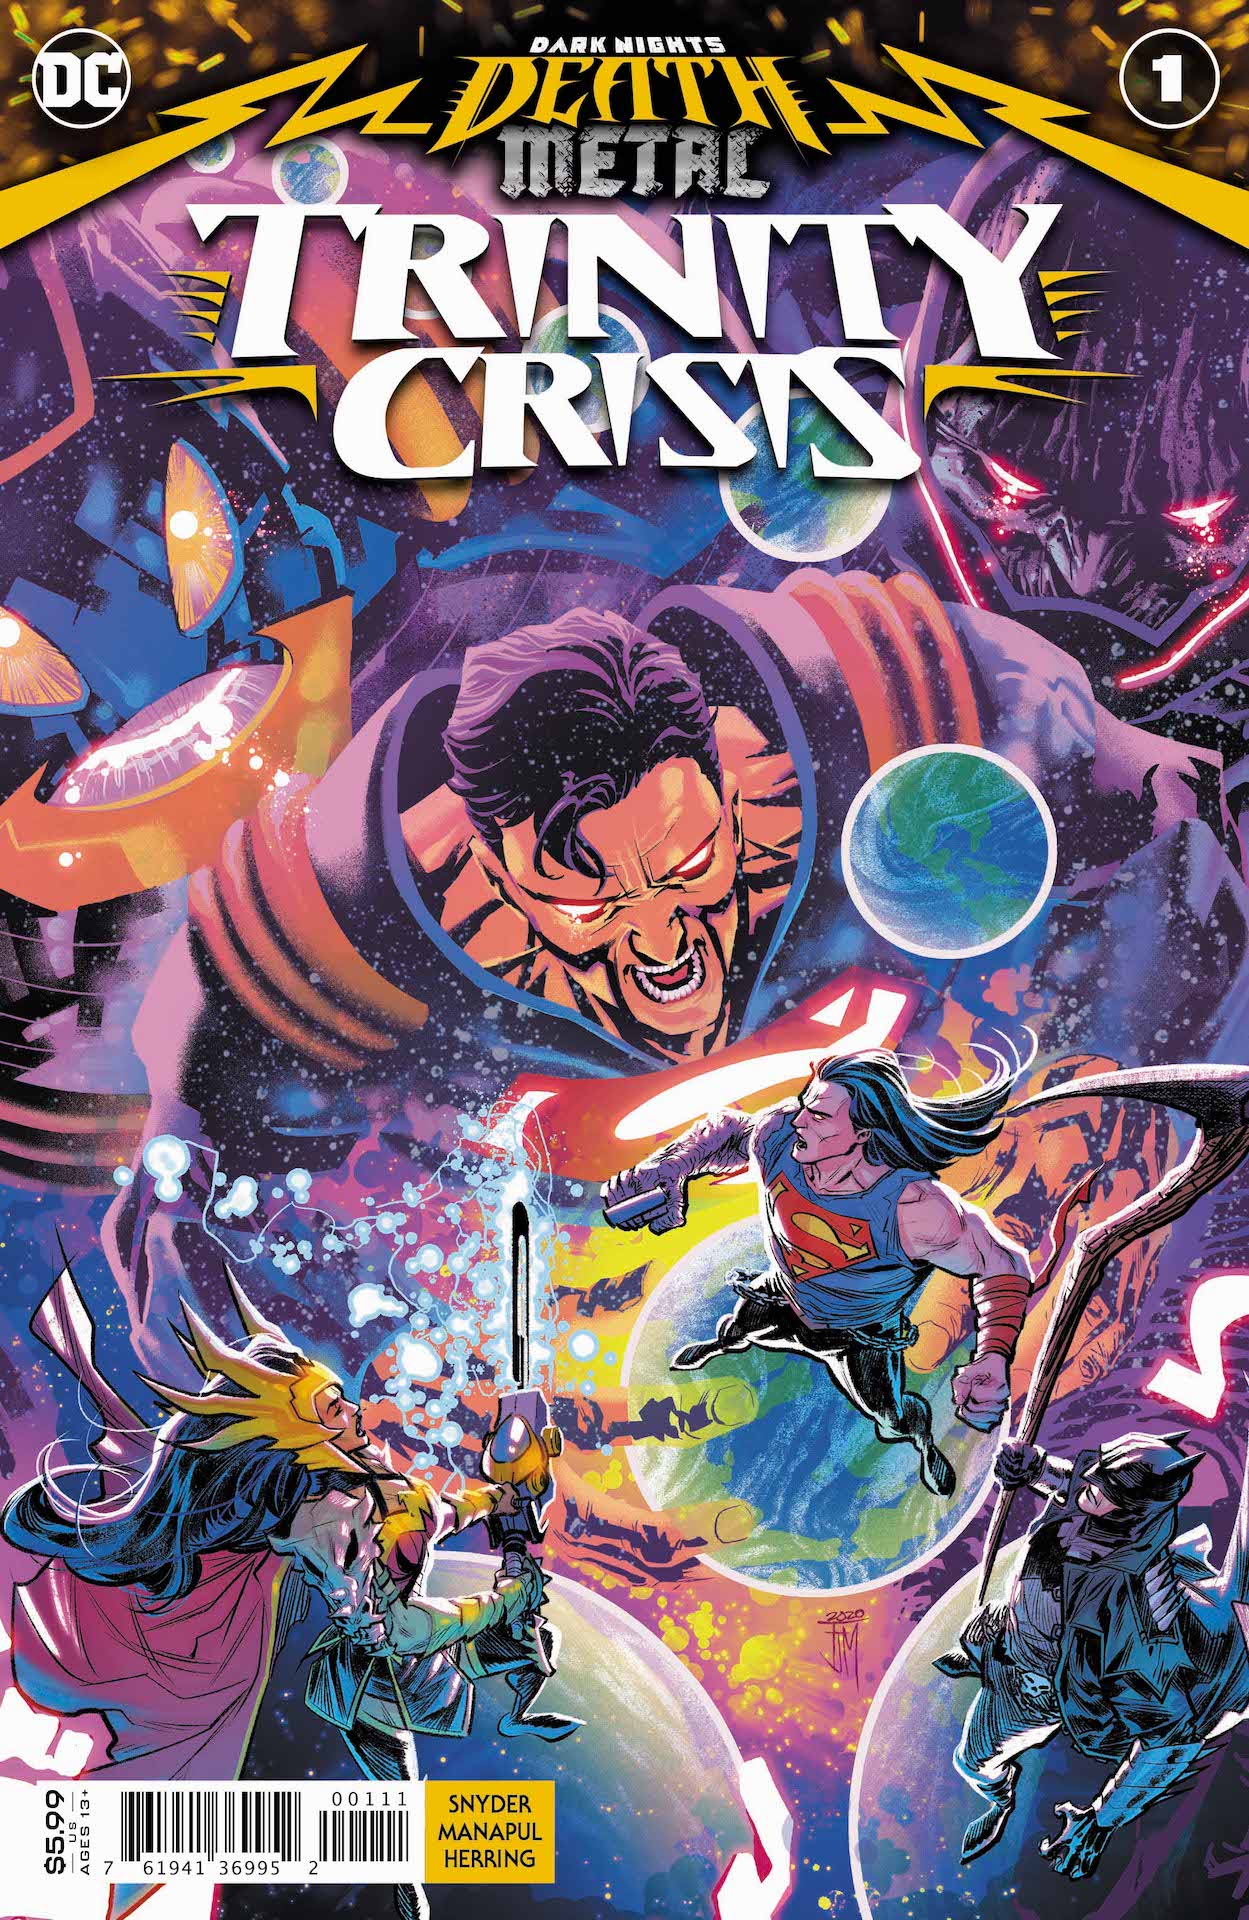 DC Preview: Dark Nights: Death Metal Trinity Crisis #1